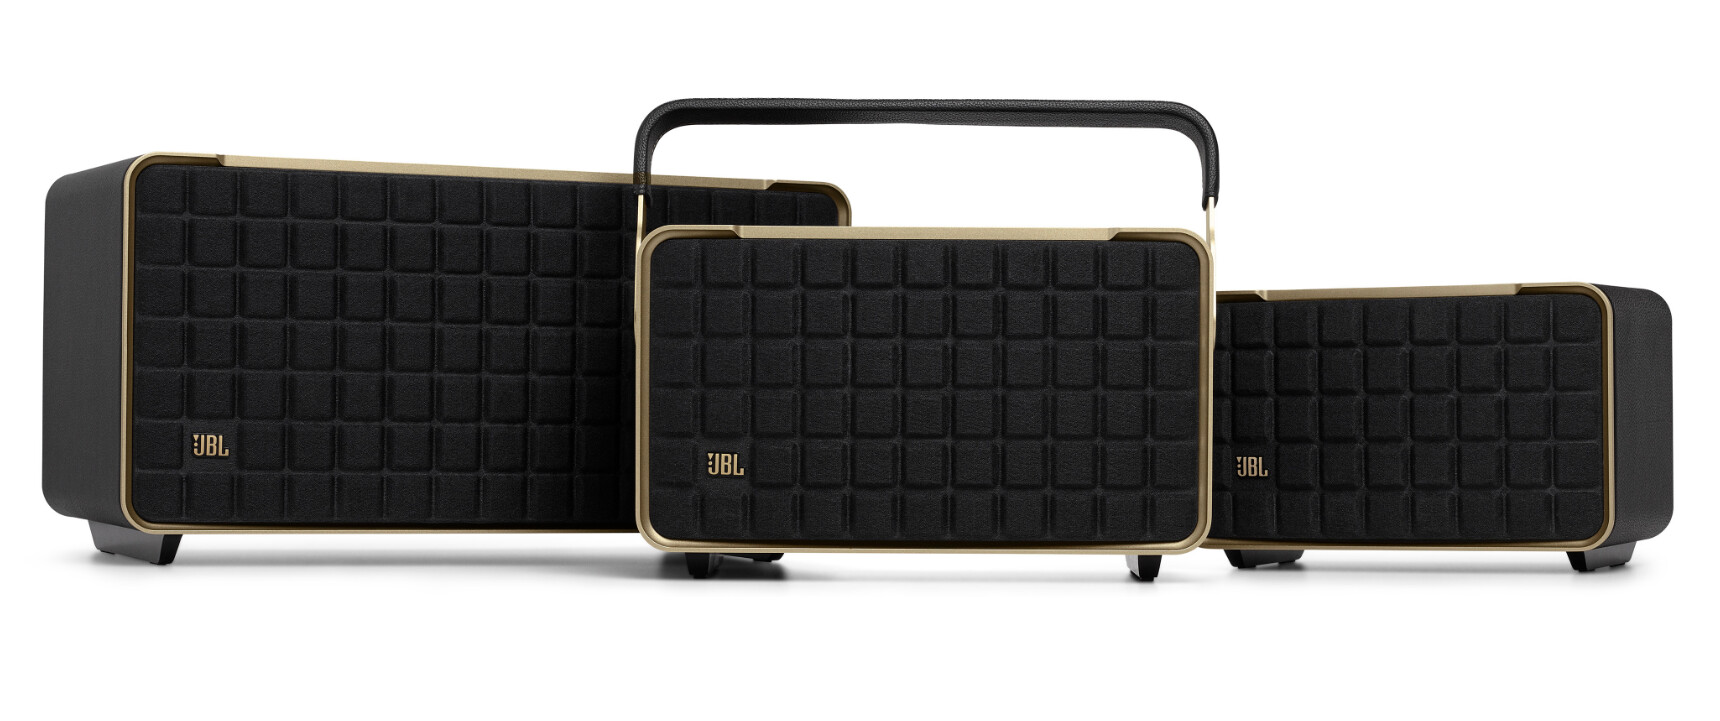 JBL Announces the Authentics Series of Portable Speakers | TechPowerUp